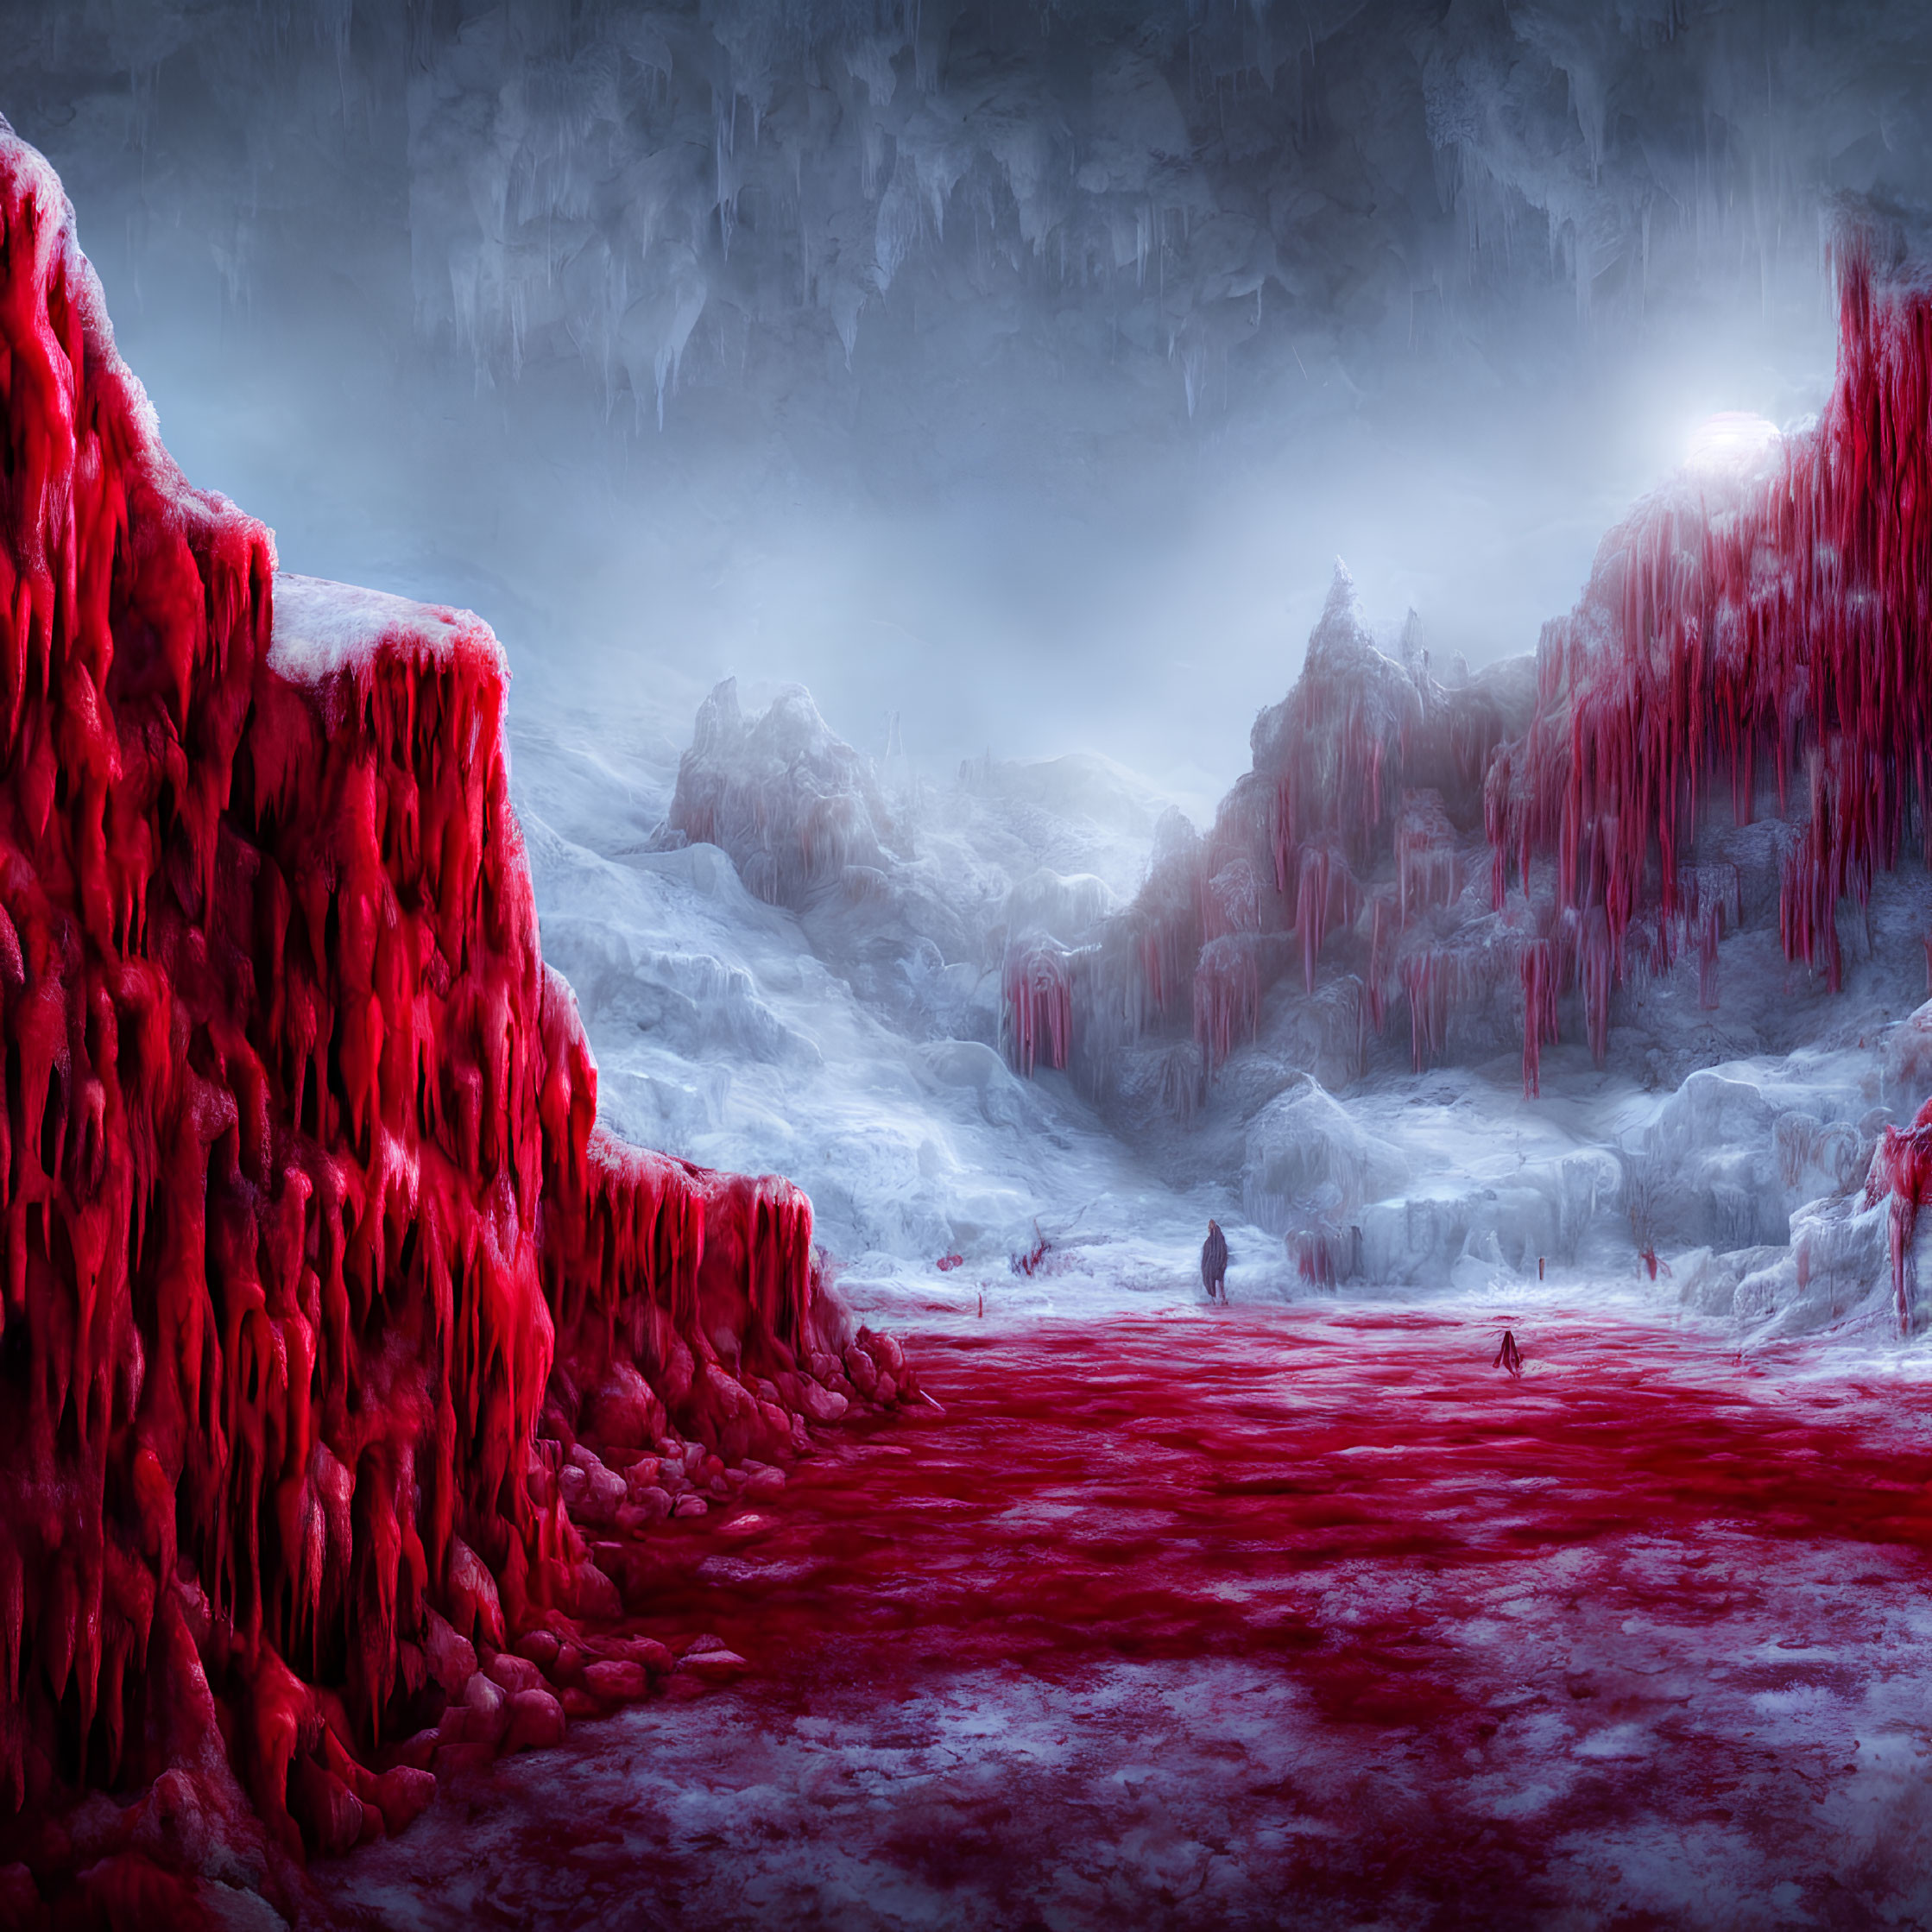 Surreal landscape: red vegetation, icy rivers, stalactites, stalagmites, dim